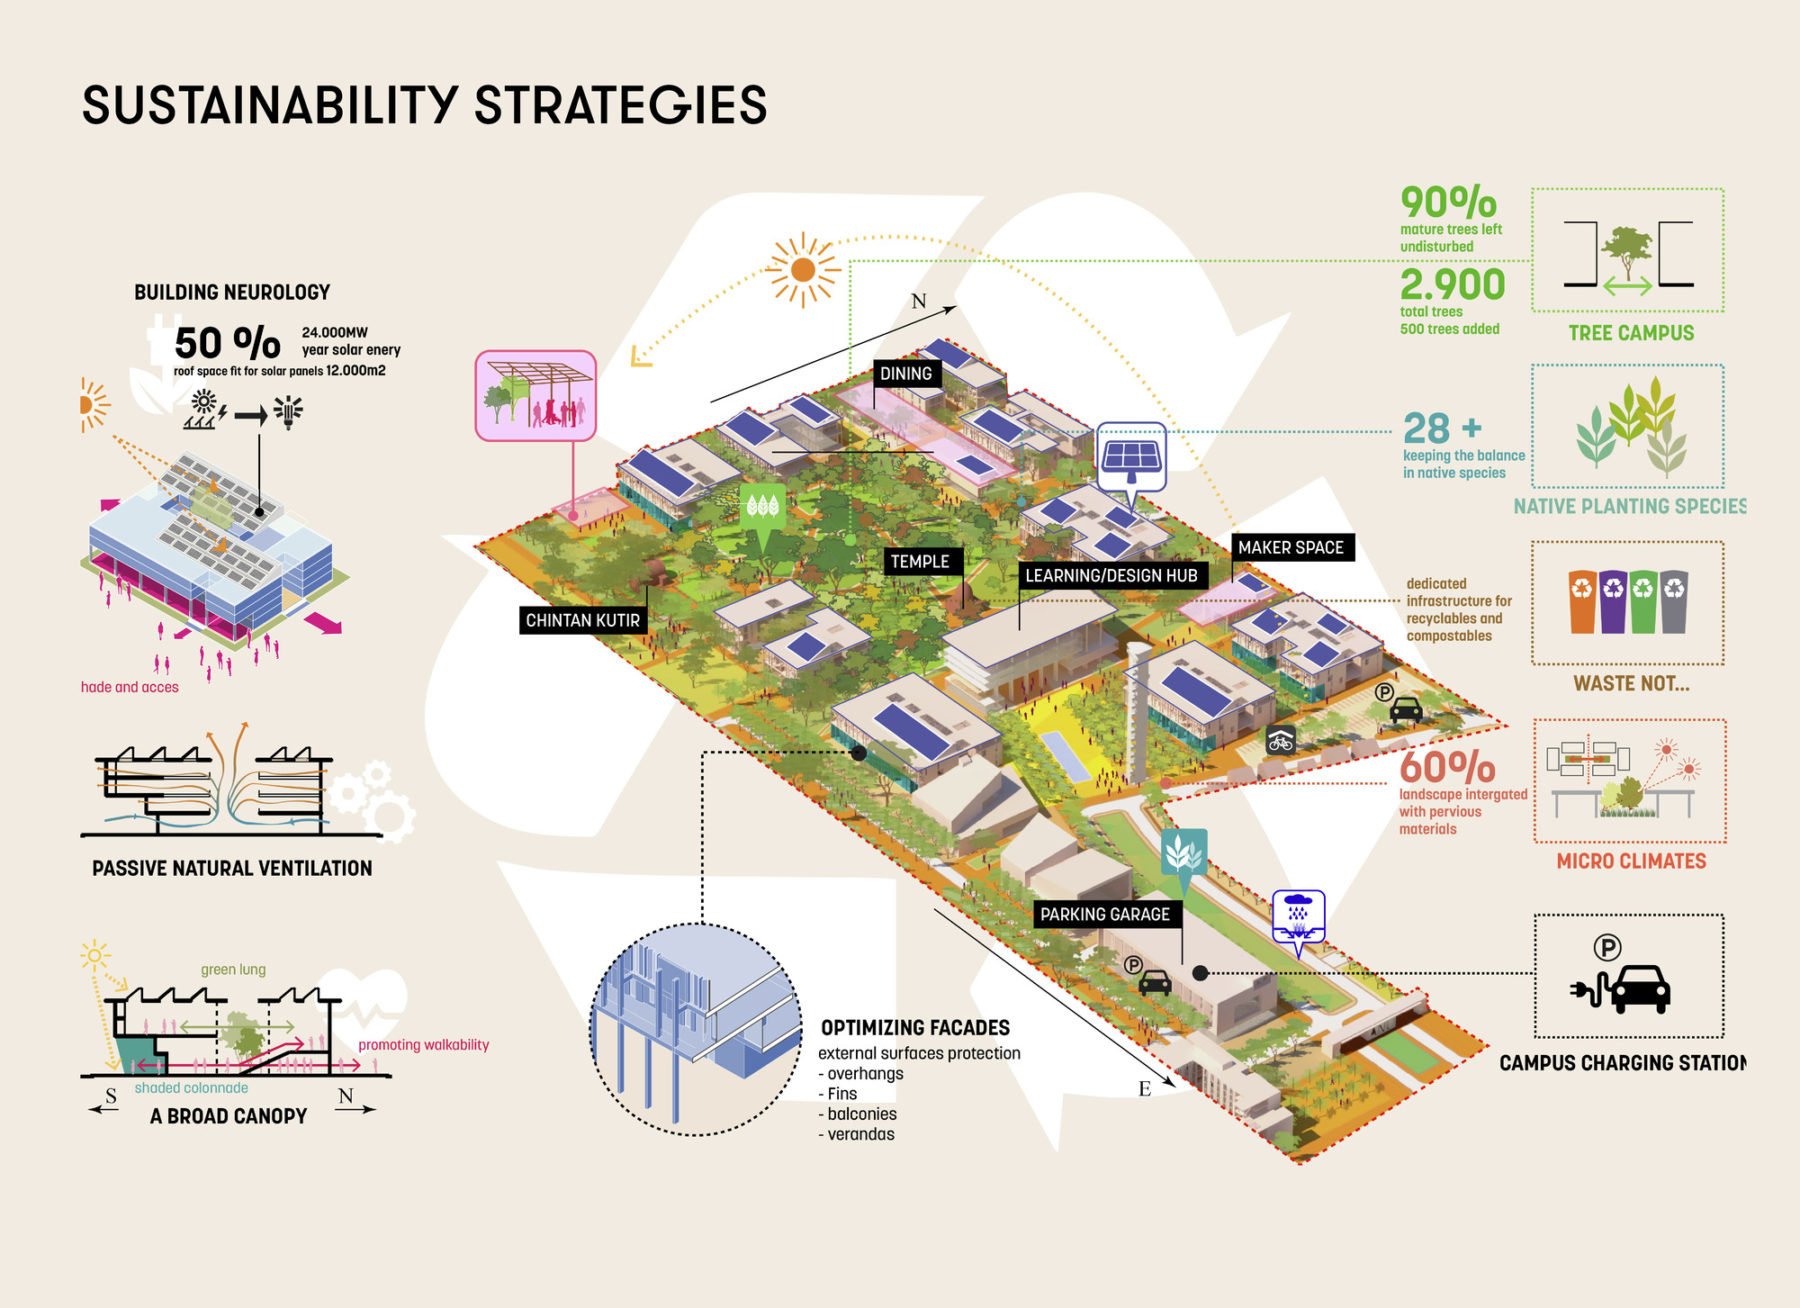 Sustainability strategies